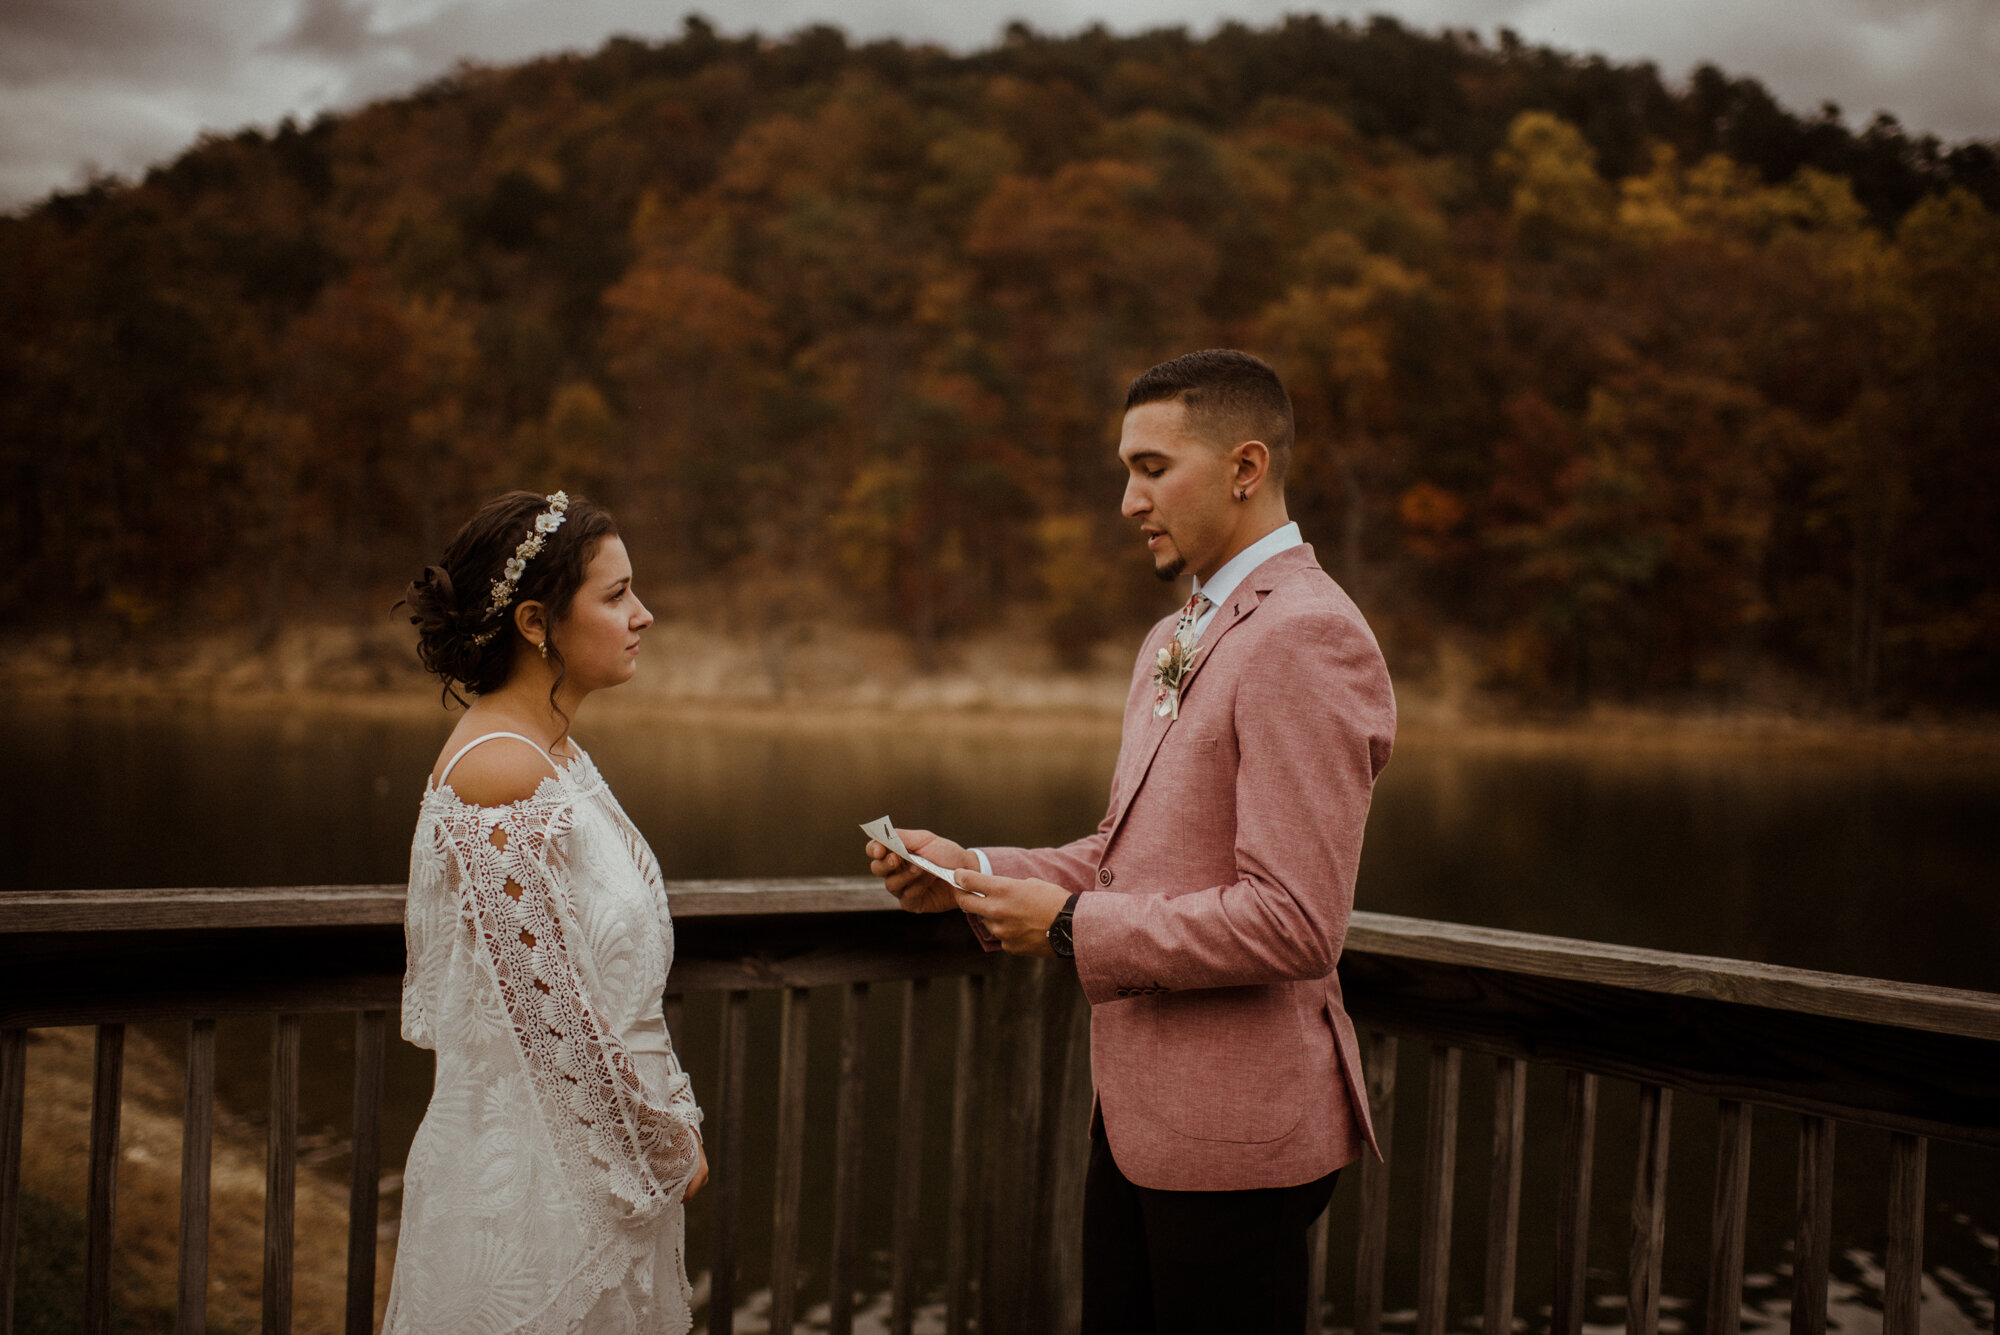 Antonia and Joey - Rainy Autumn Wedding - Small Virginia Wedding - White Sails Creative Photography_37.jpg